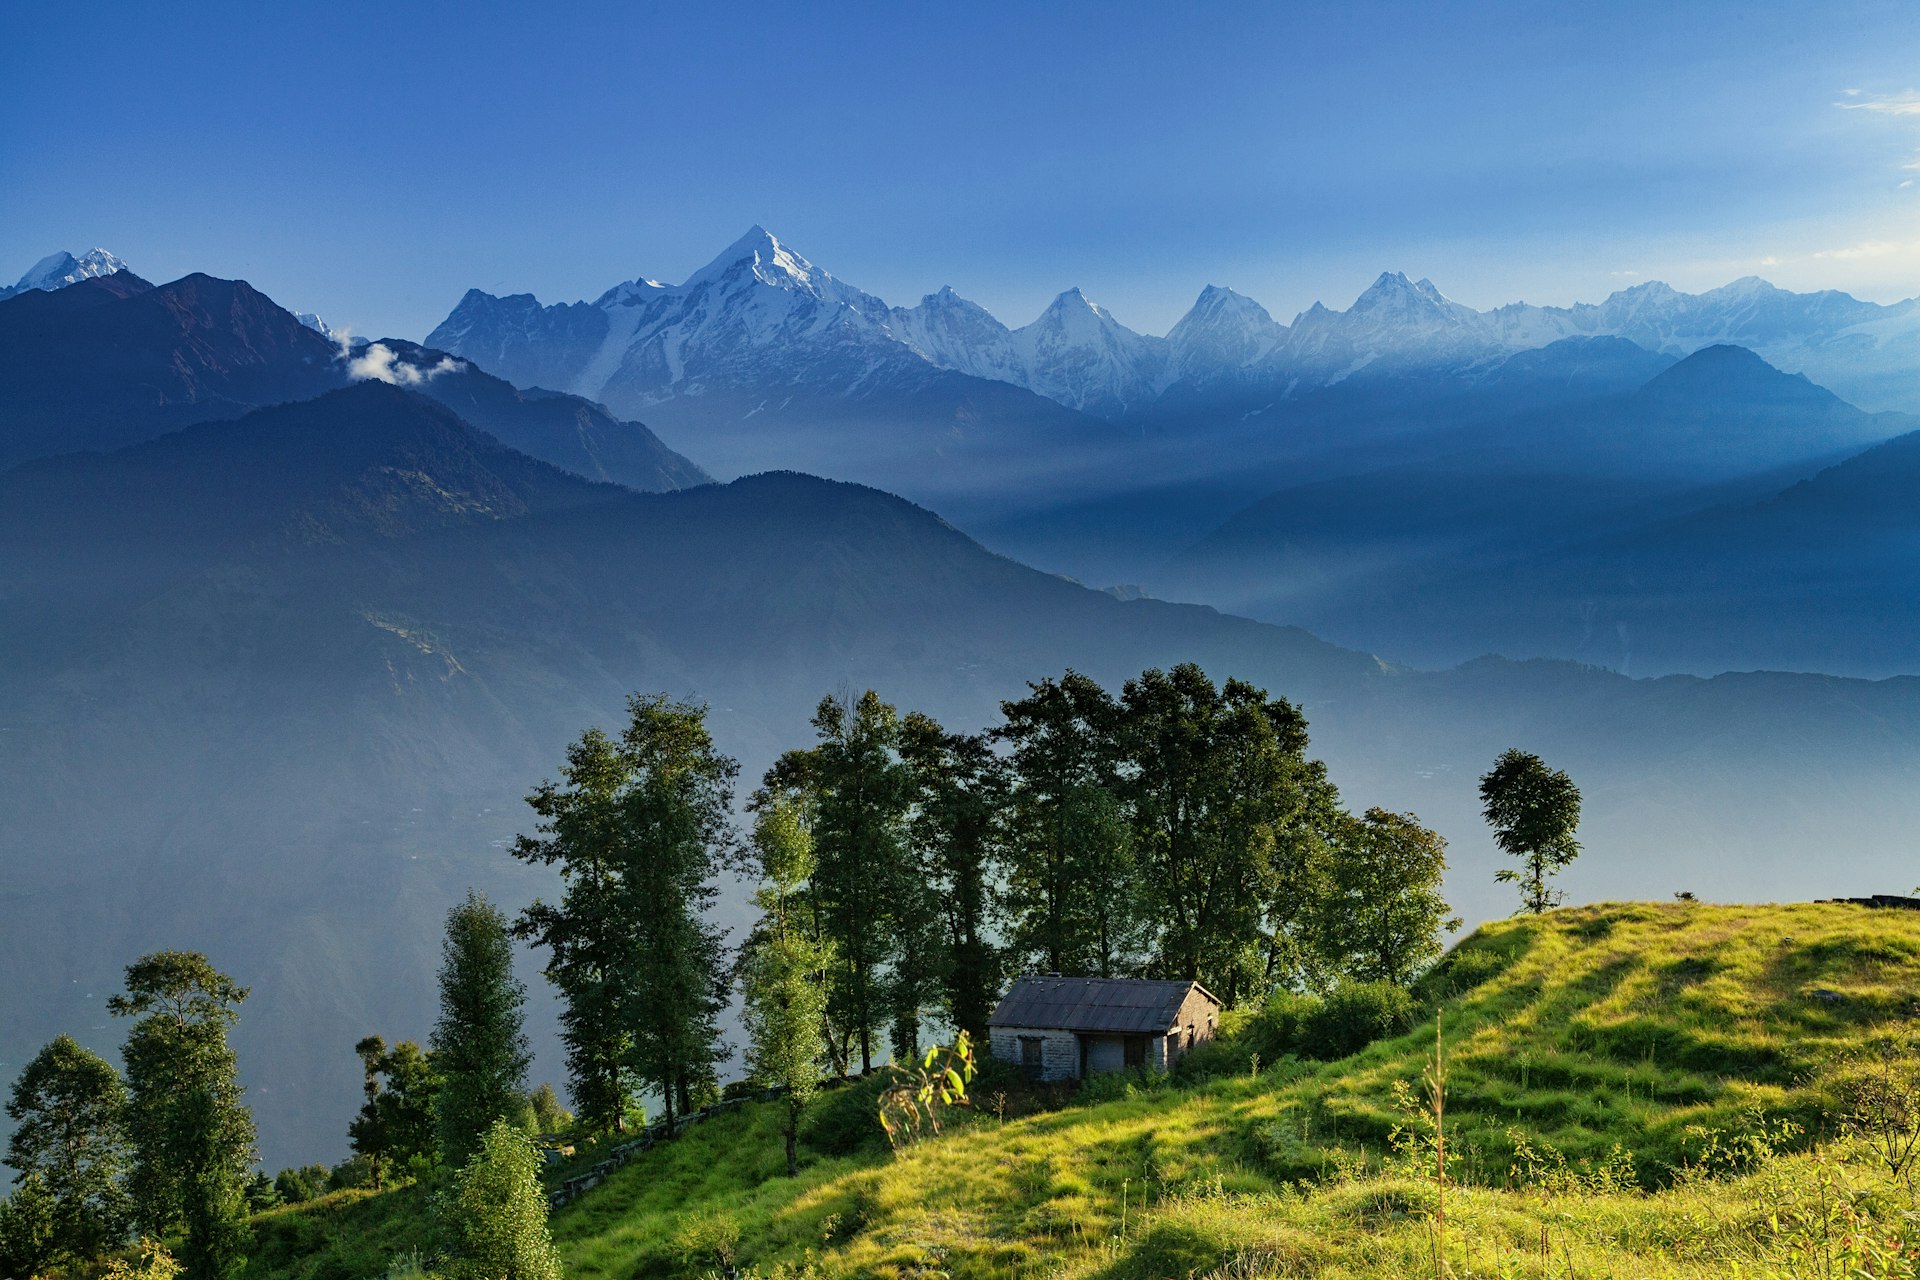 View of beautiful Panchchuli Peaks of the Great Himalayas as seen from Munsiyari